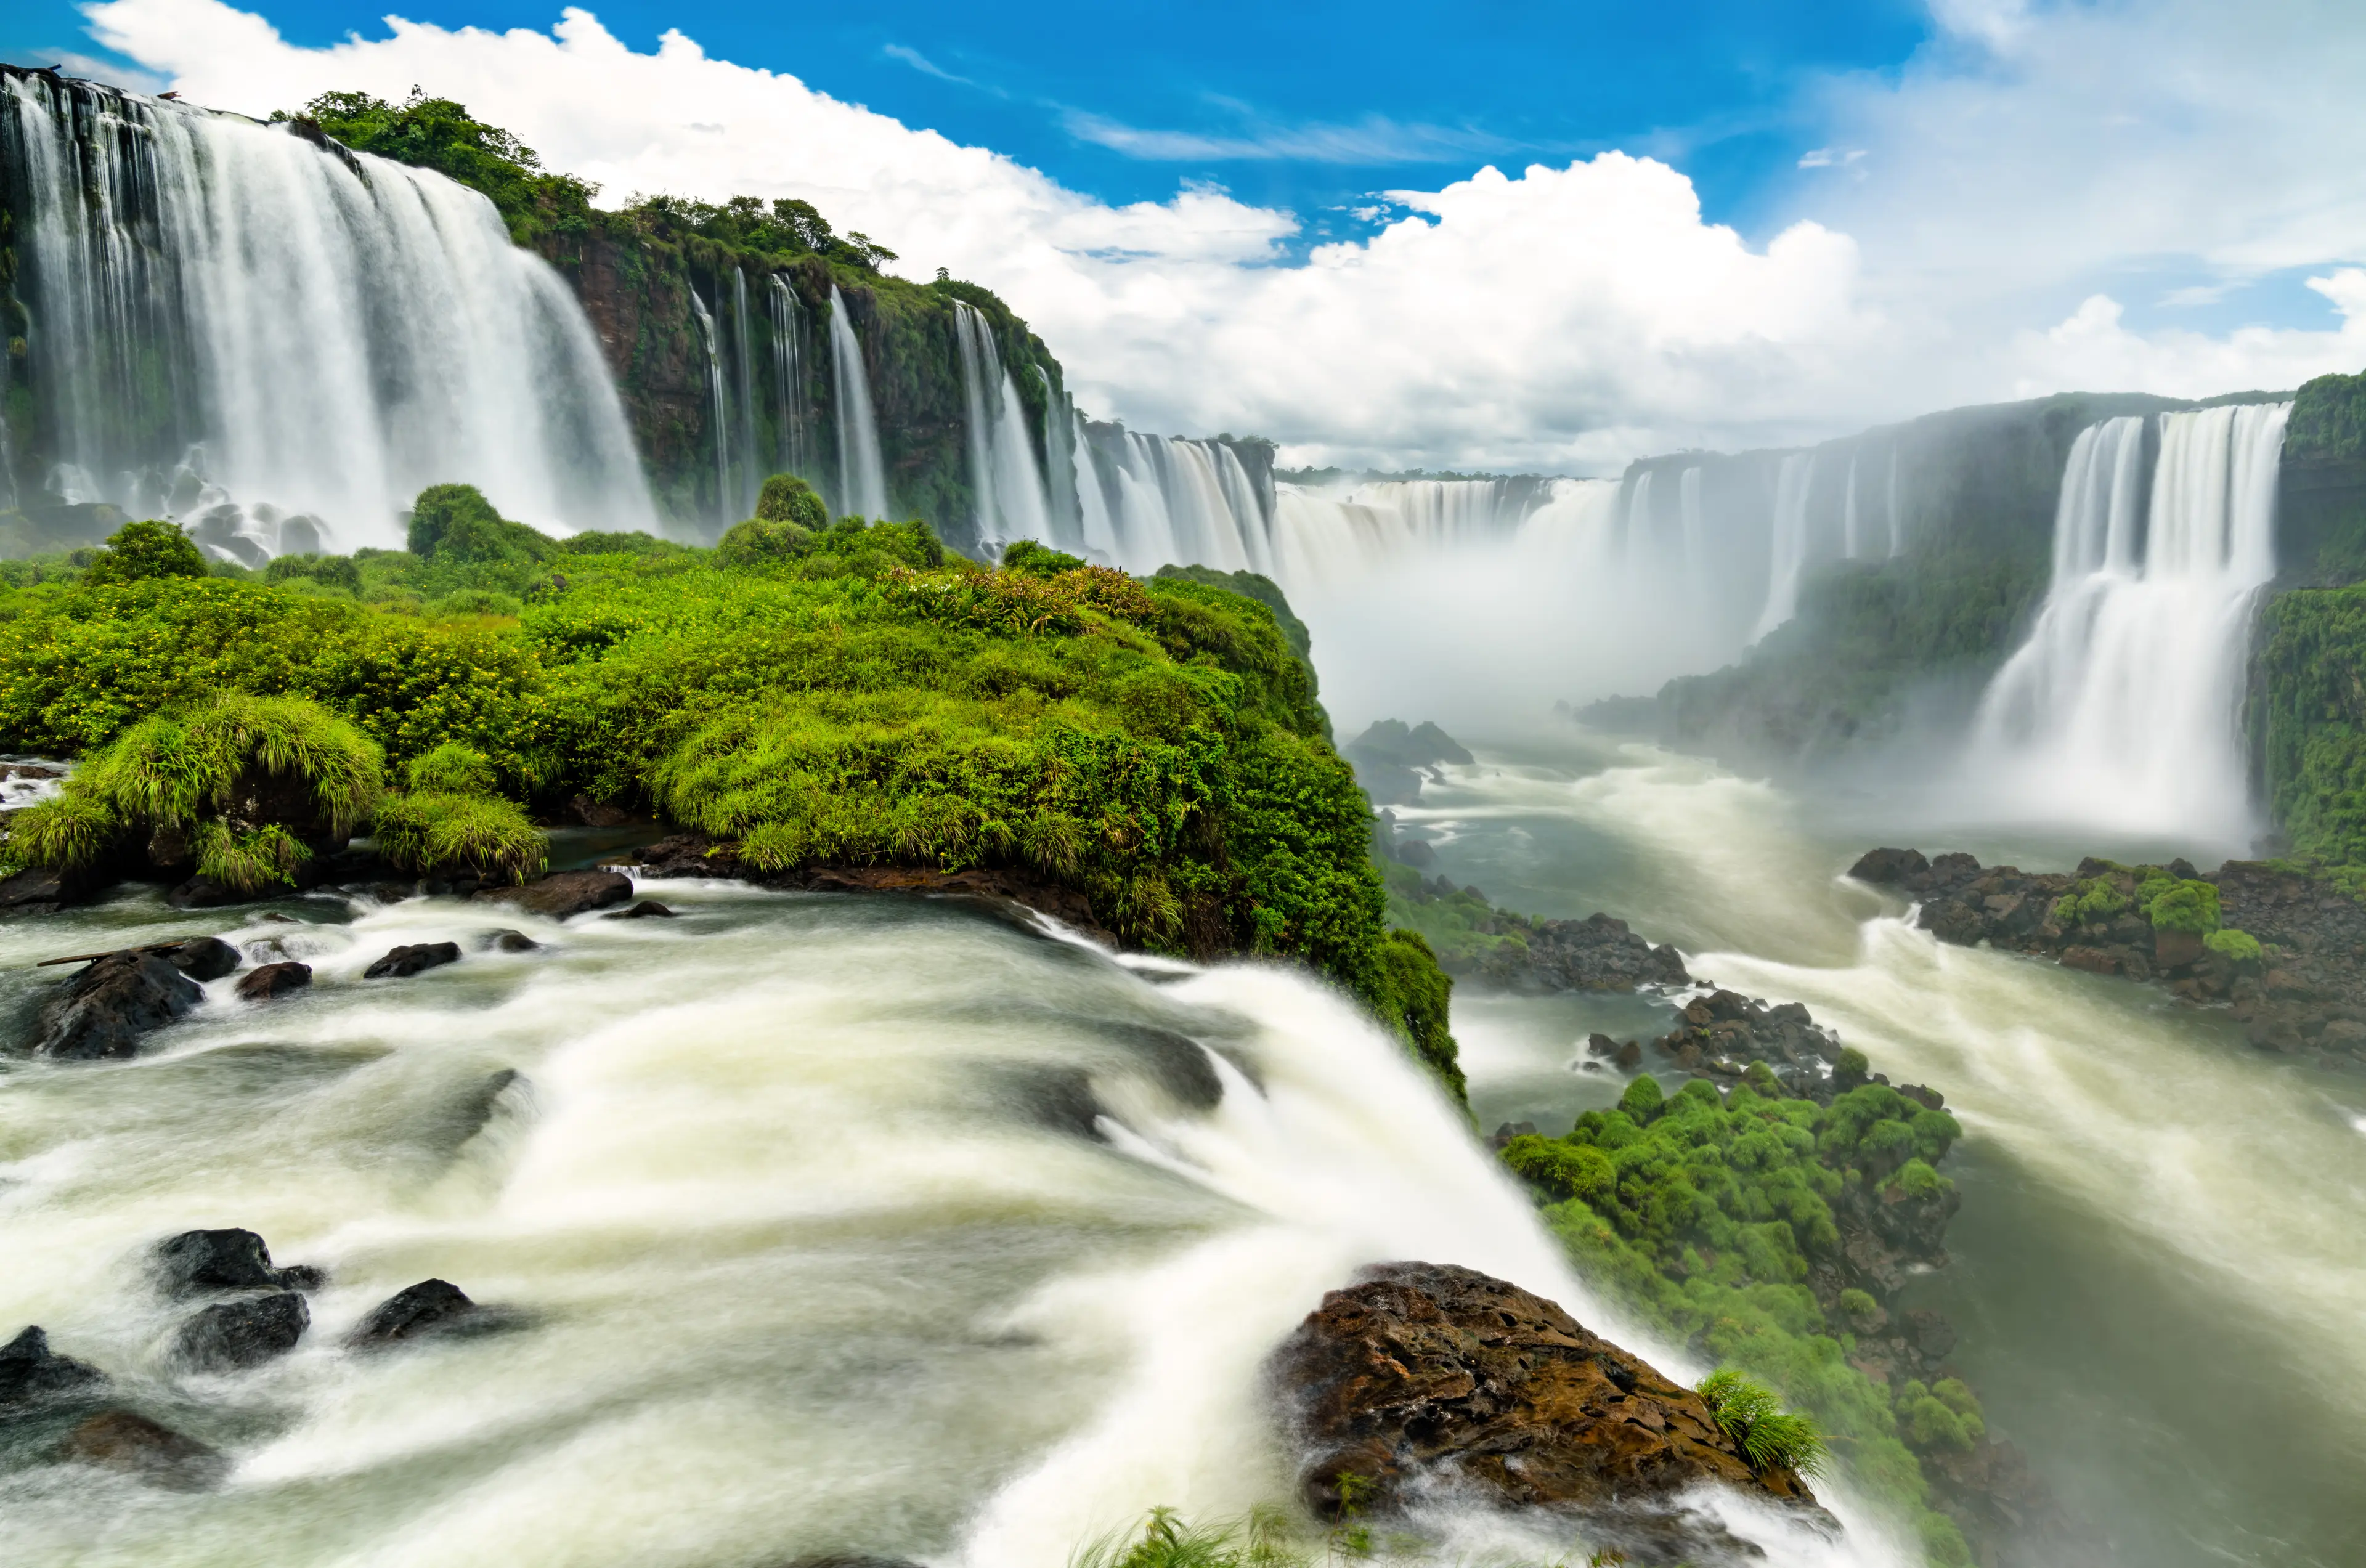 1-Day Exciting Adventure to Iguazu Falls, Brazil